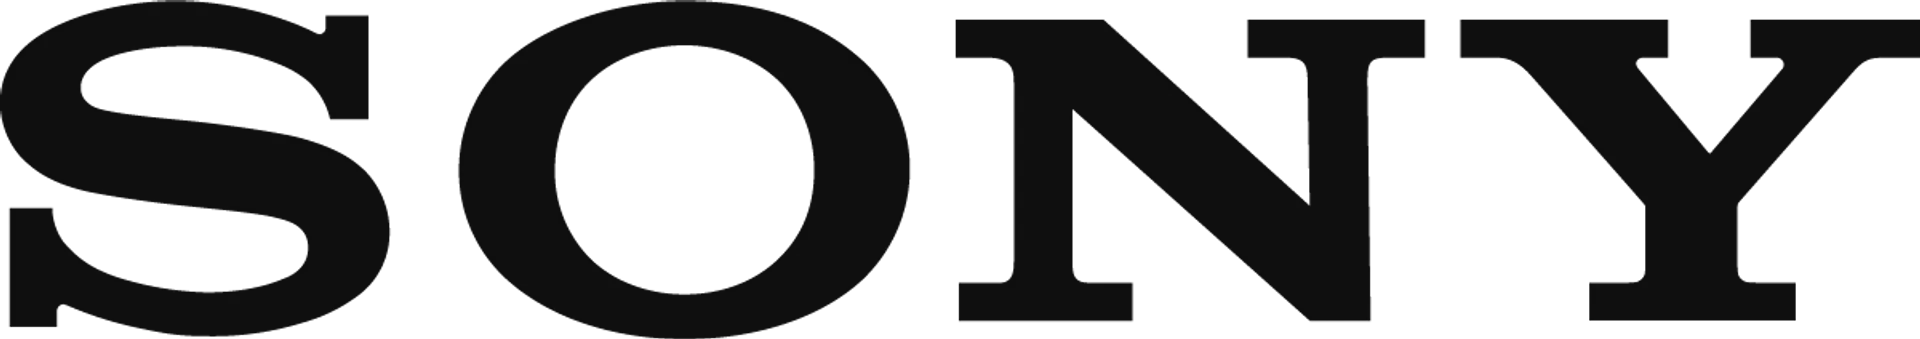 SONY logo die aktuell Flugblatt